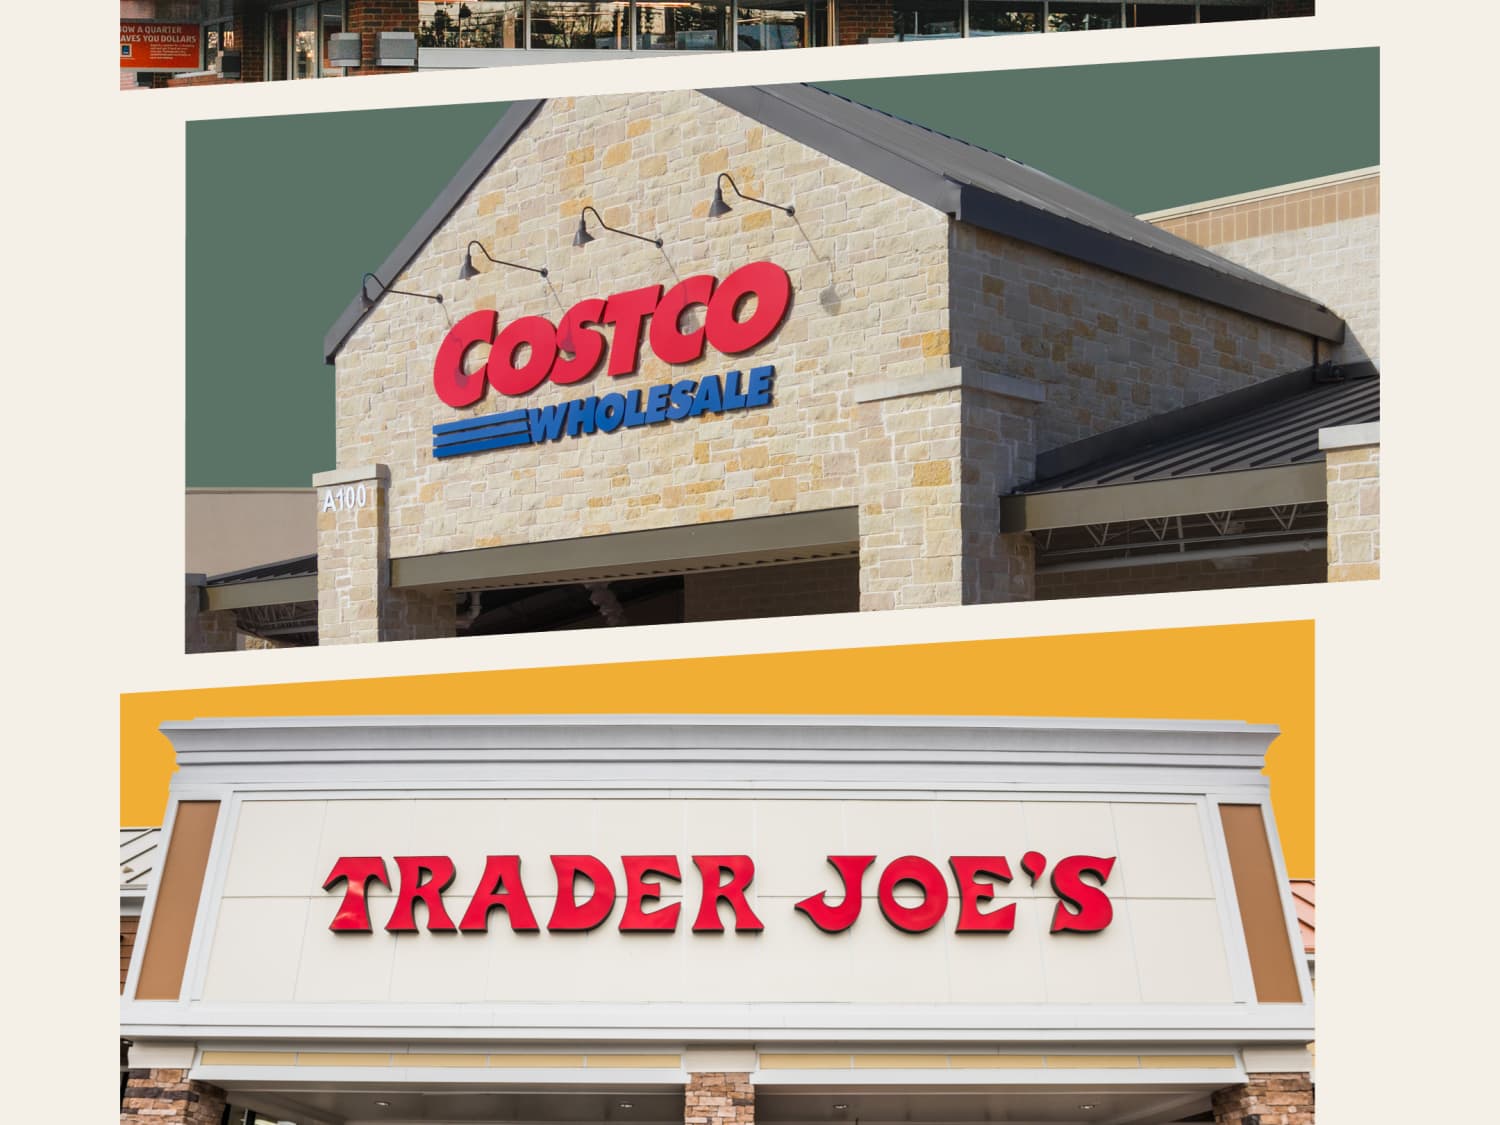 Cheapest Produce - Trader Joe's, Costco, Aldi, Whole Foods